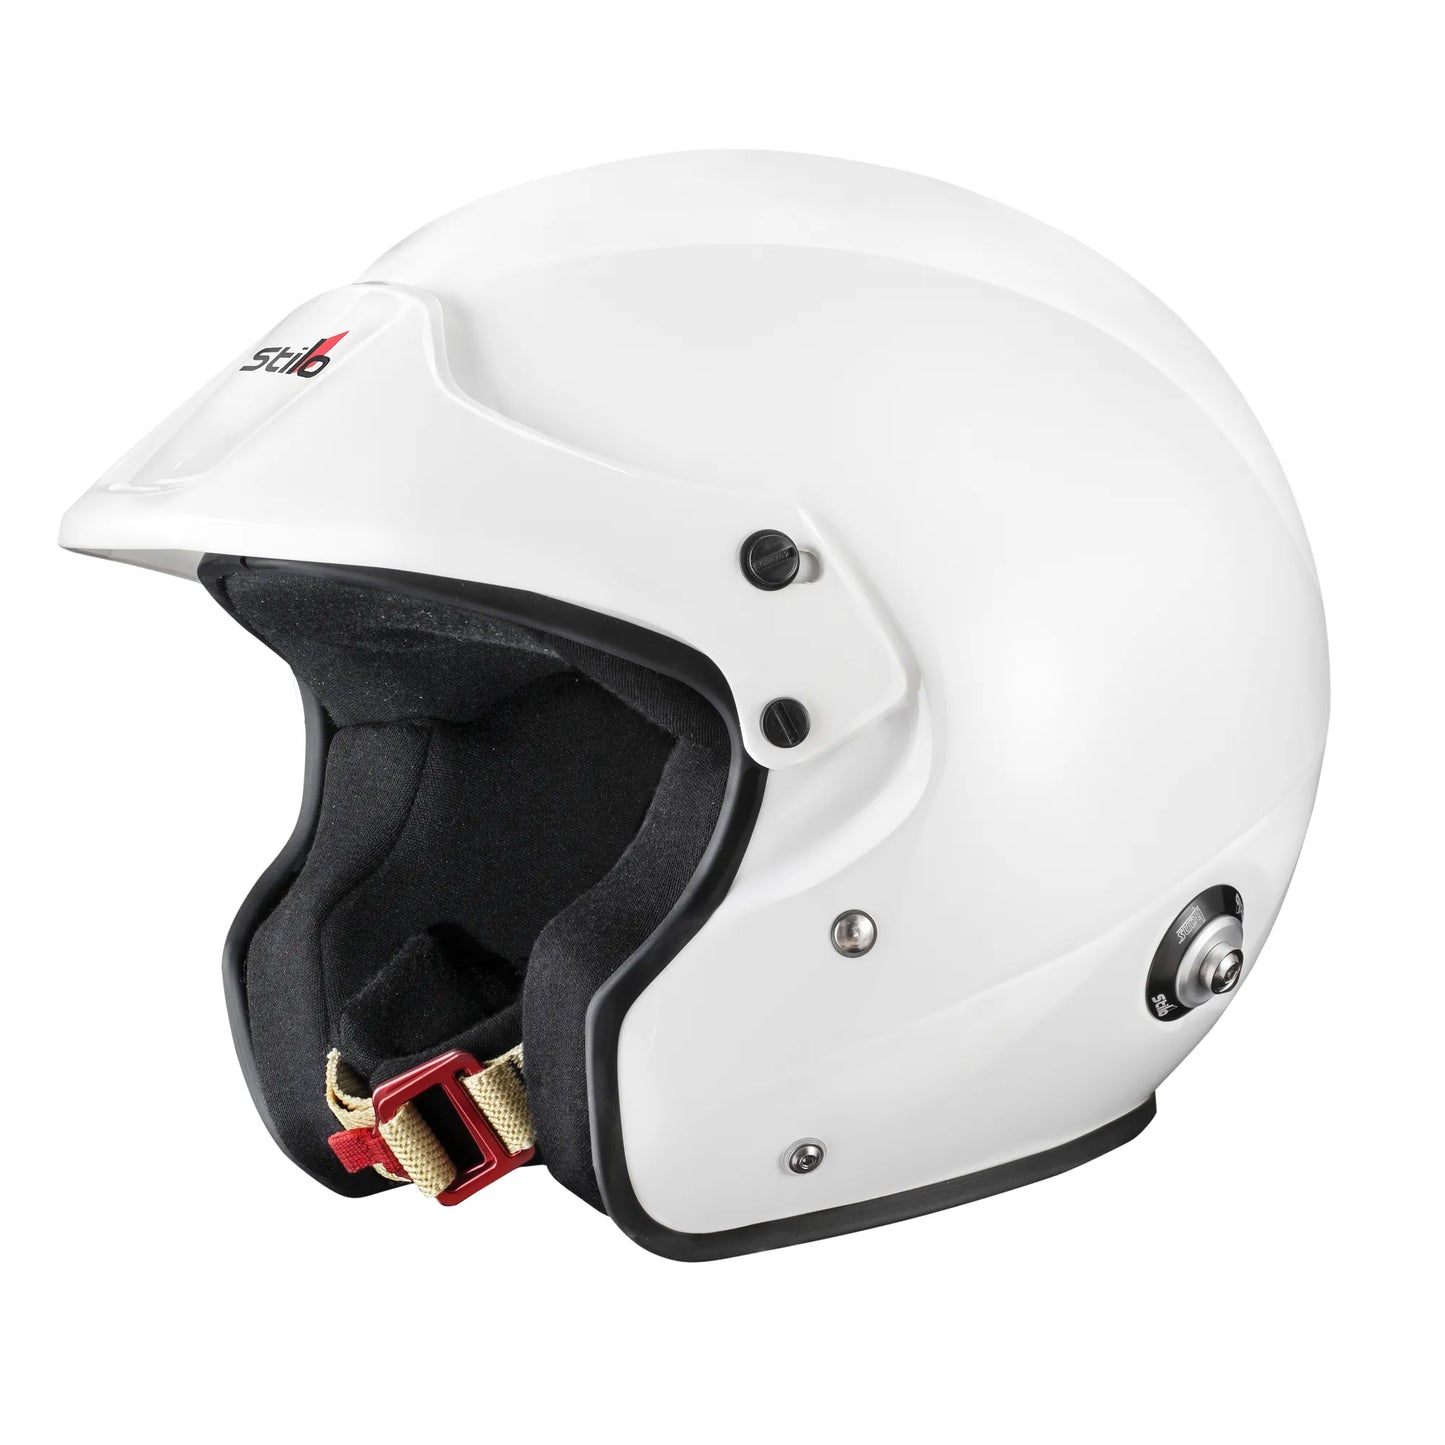 Stilo Sport Jet open face helmet